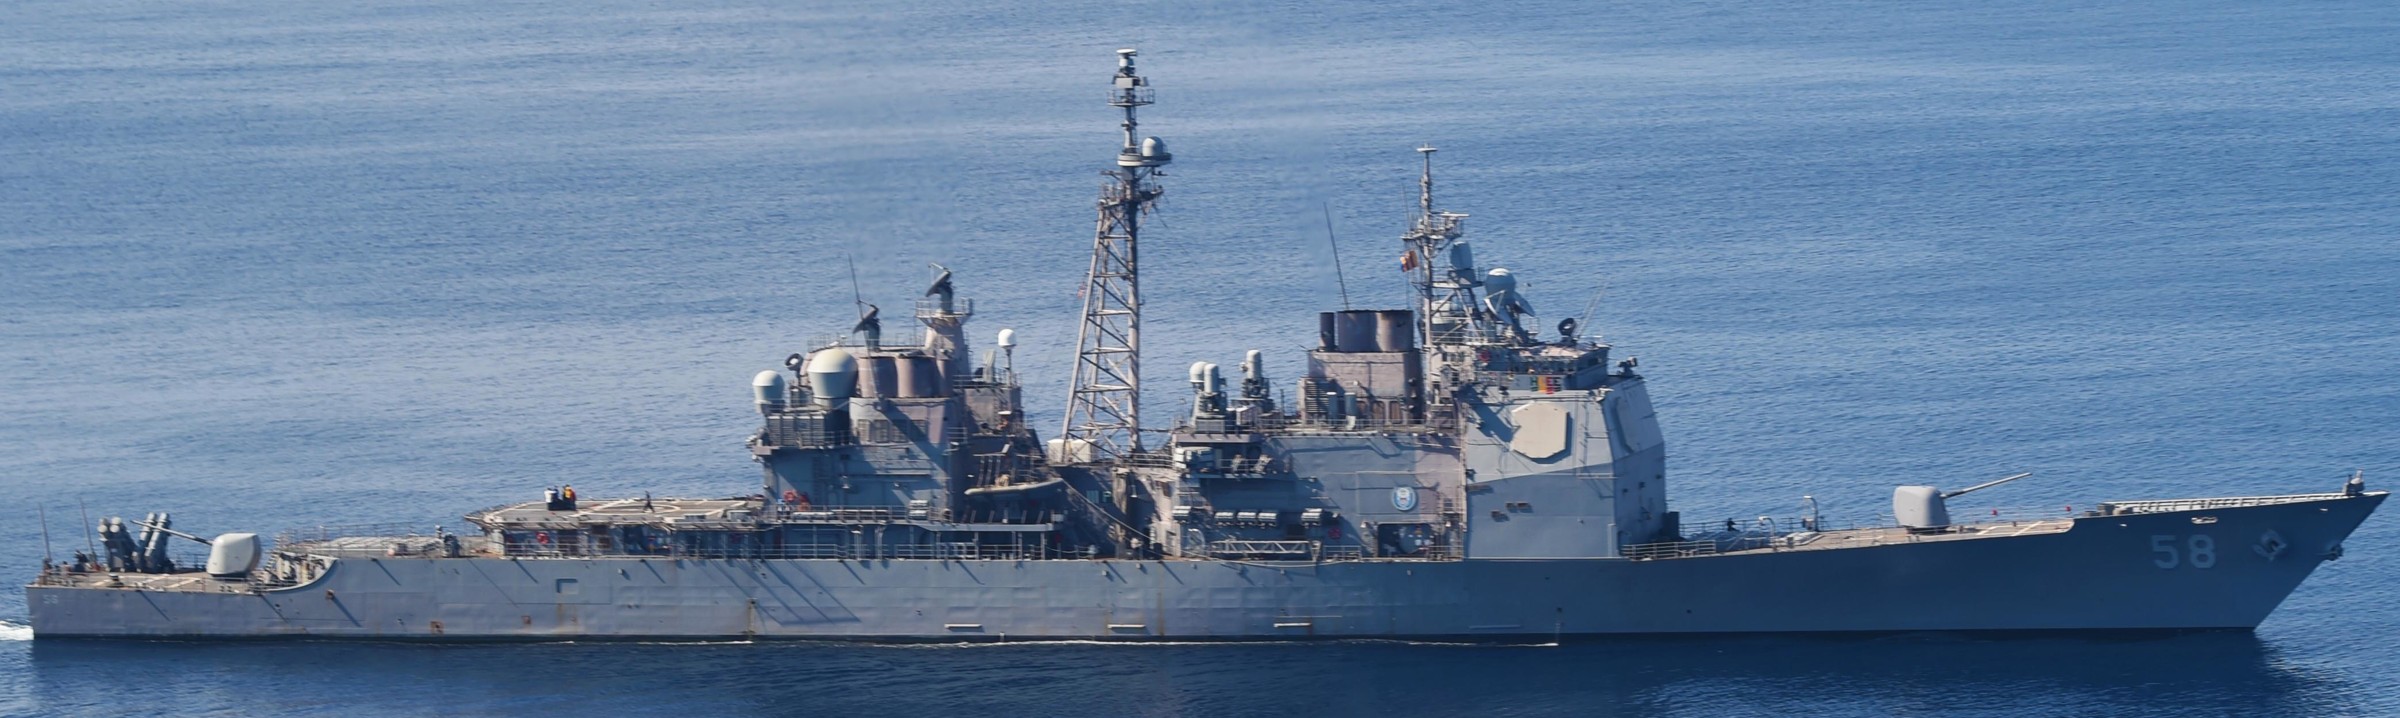 cg-58 uss philippine sea ticonderoga class guided missile cruiser aegis us navy 62